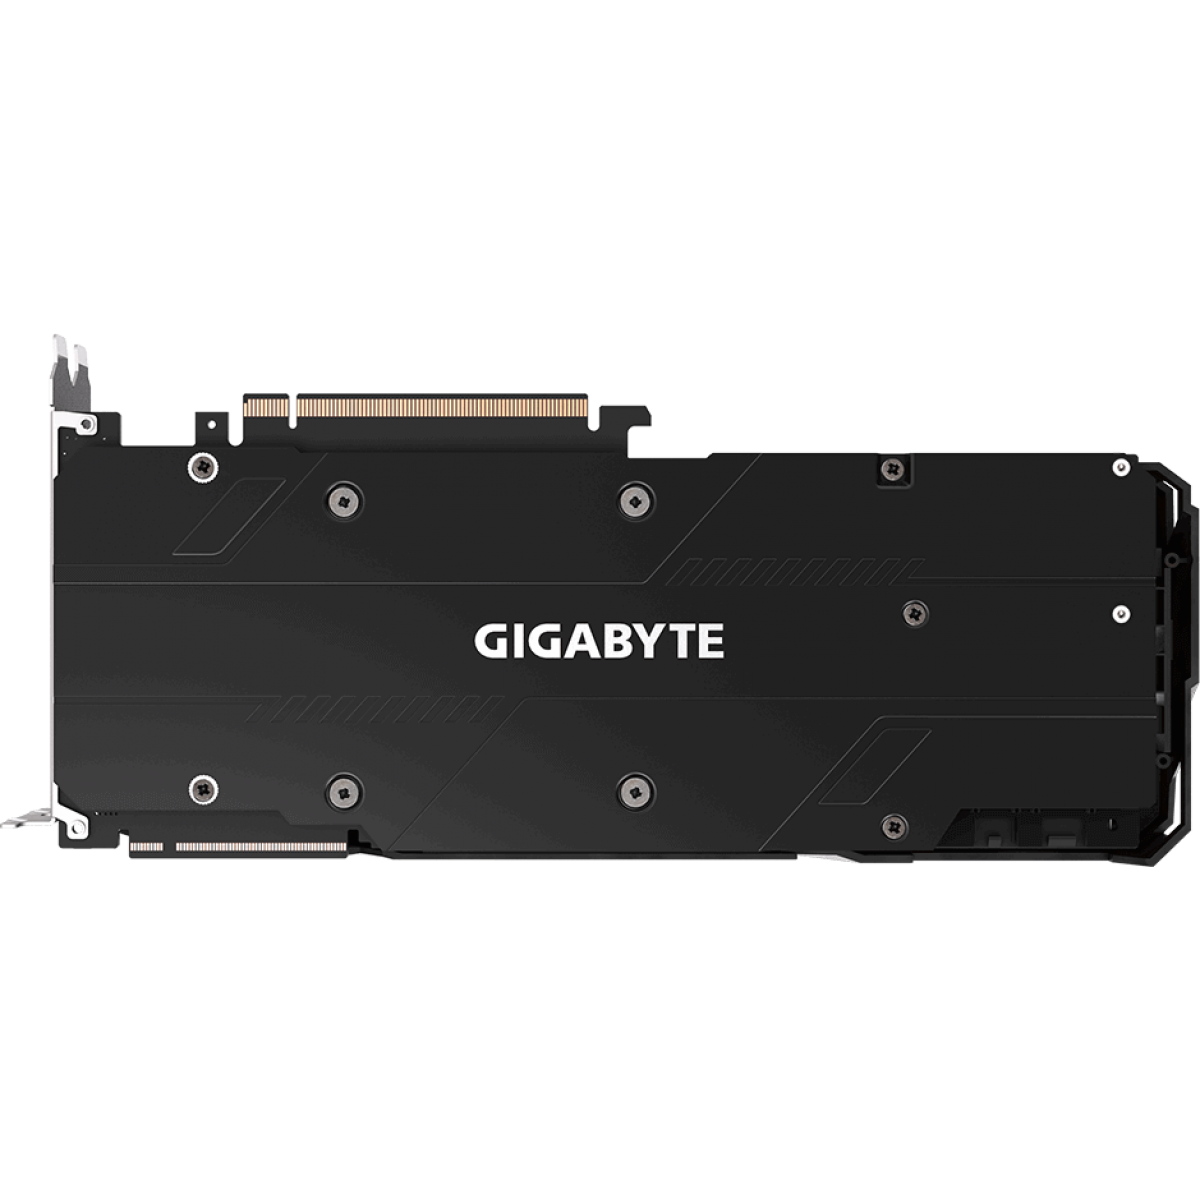 Placa de Vídeo Gigabyte Geforce RTX 2080 Windforce, 8GB GDDR6, 256Bit, GV-N2080WF3-8GC